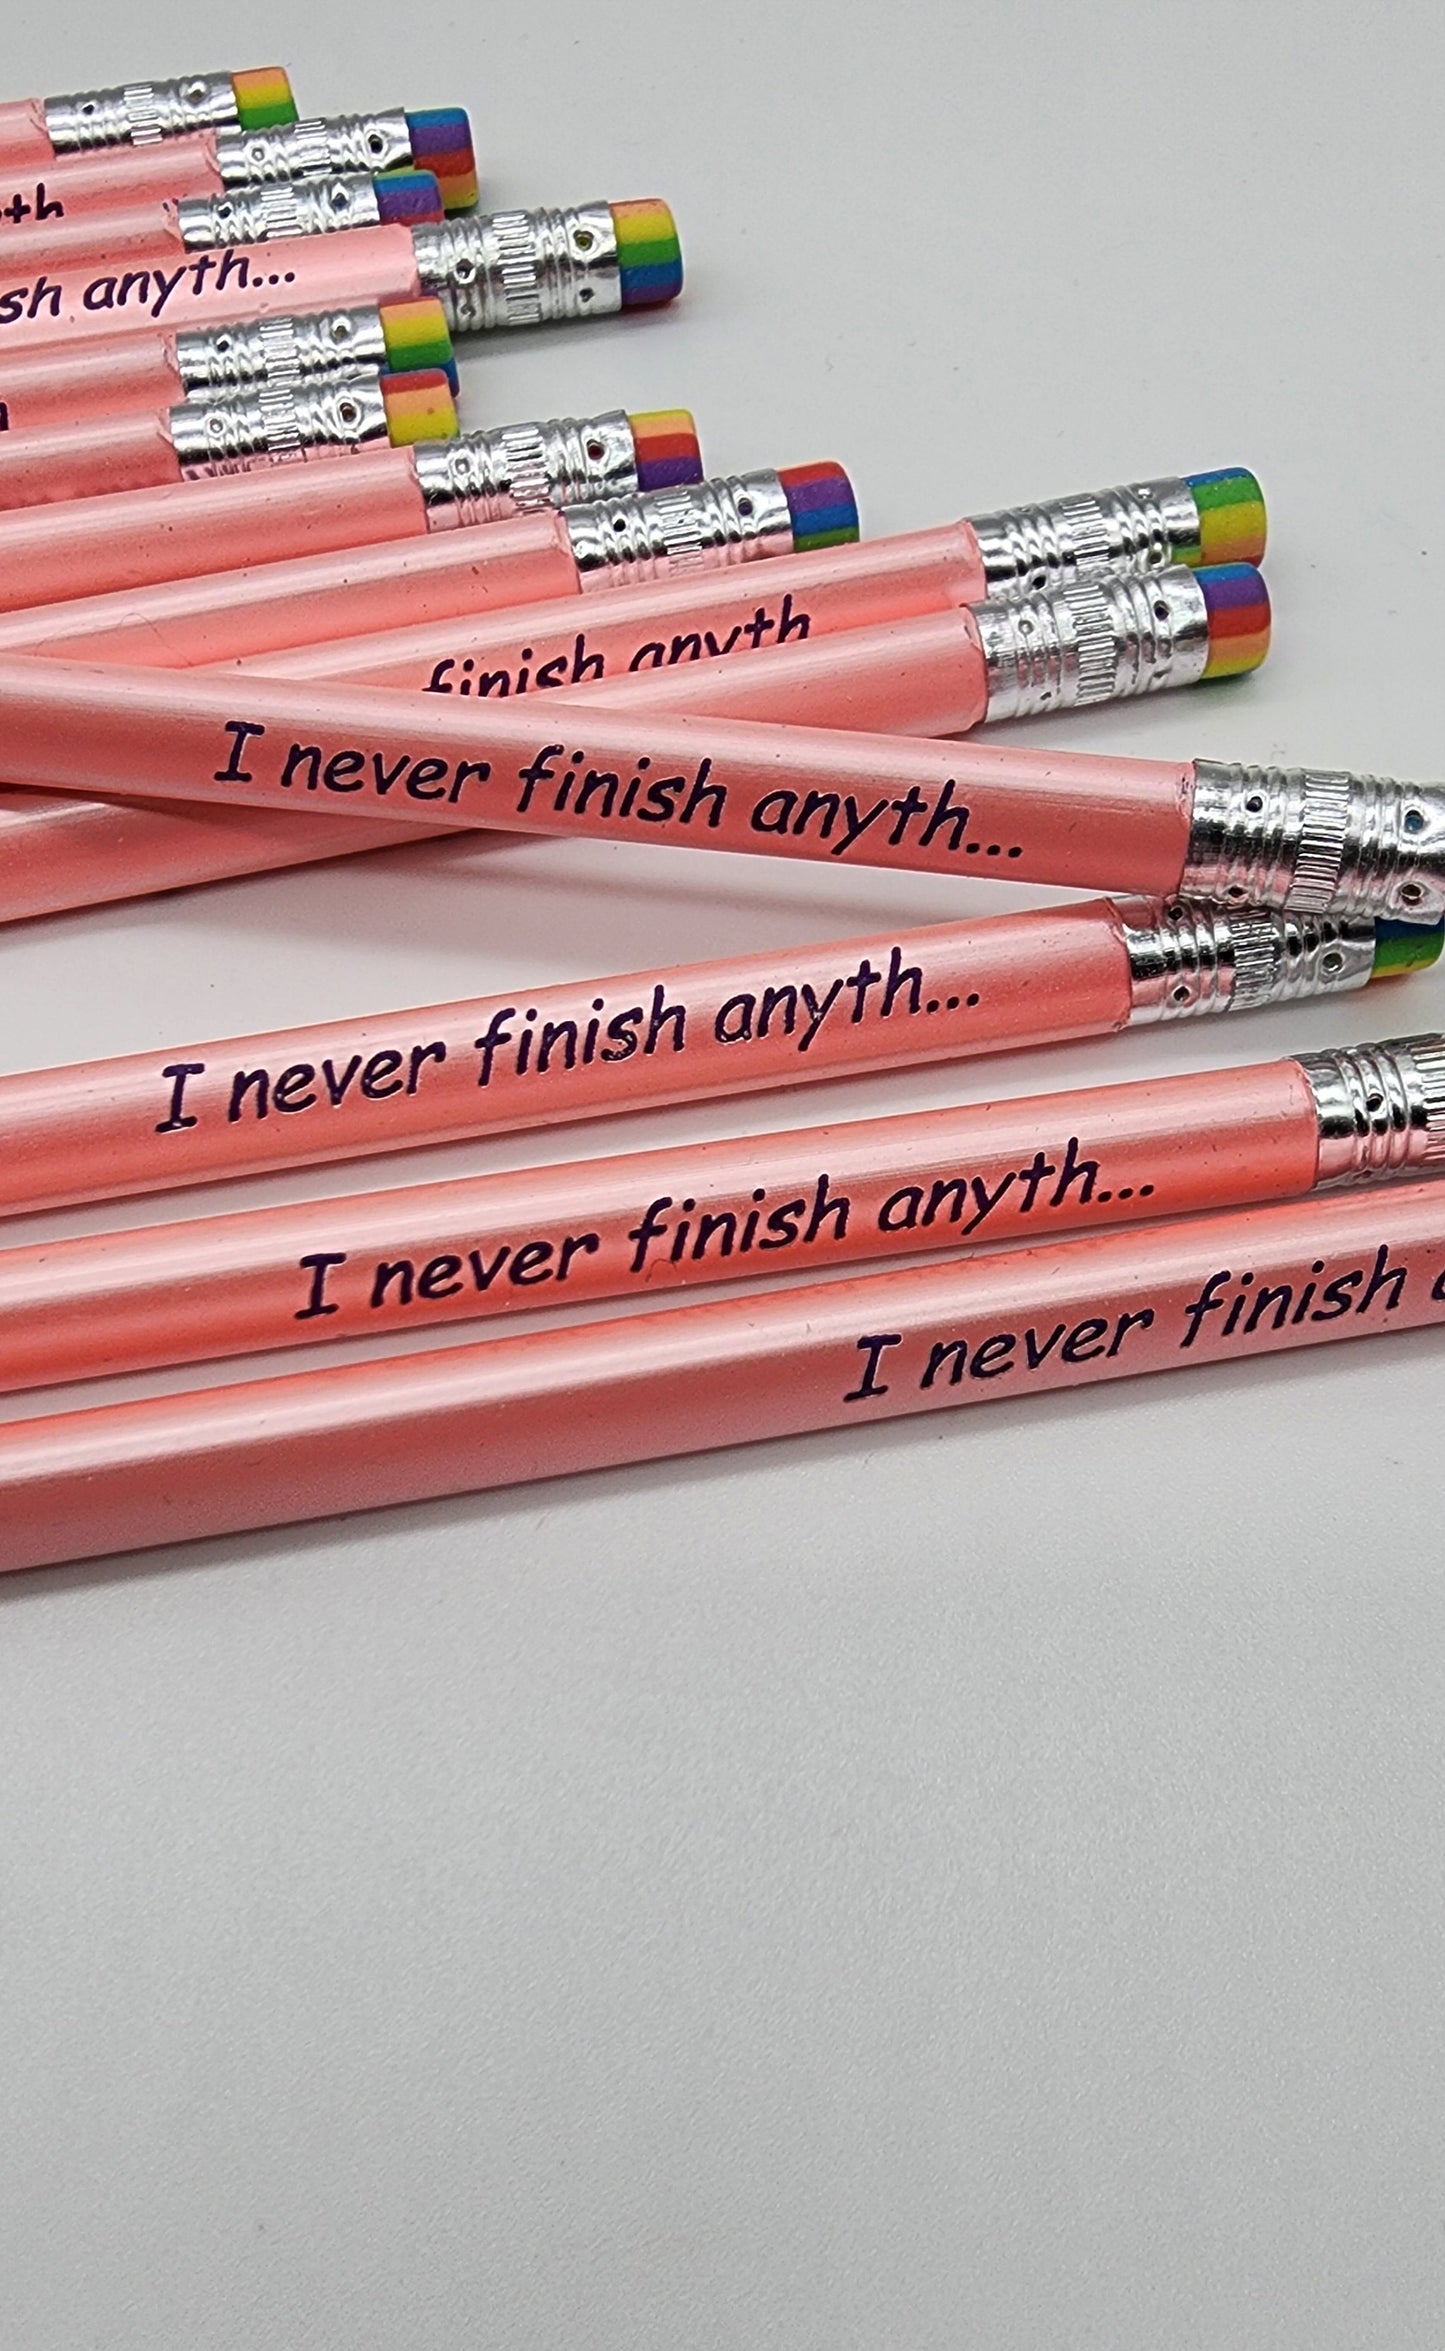 " I never finish anythi..." Triangle, rainbow pencil